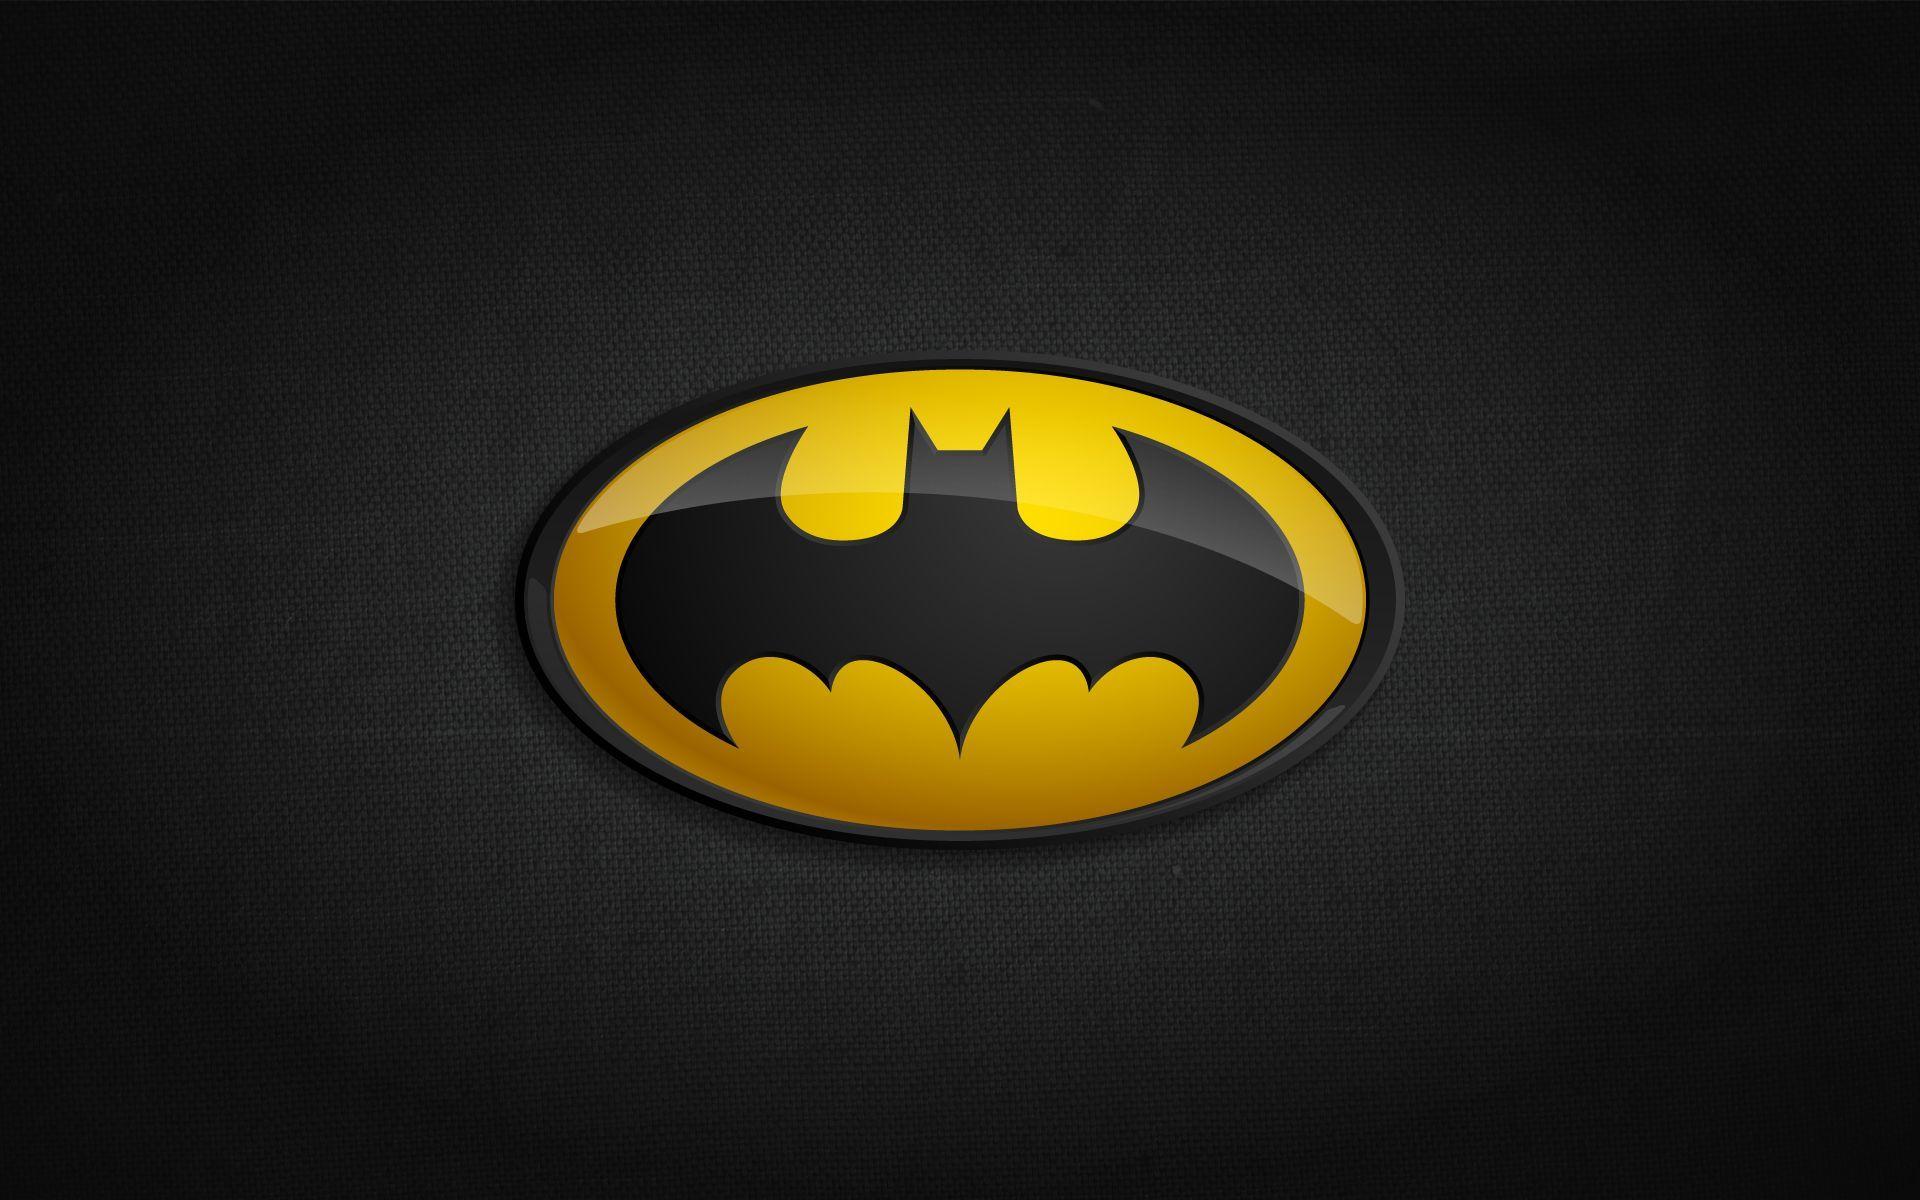 Batman Tablet Wallpapers - Top Free